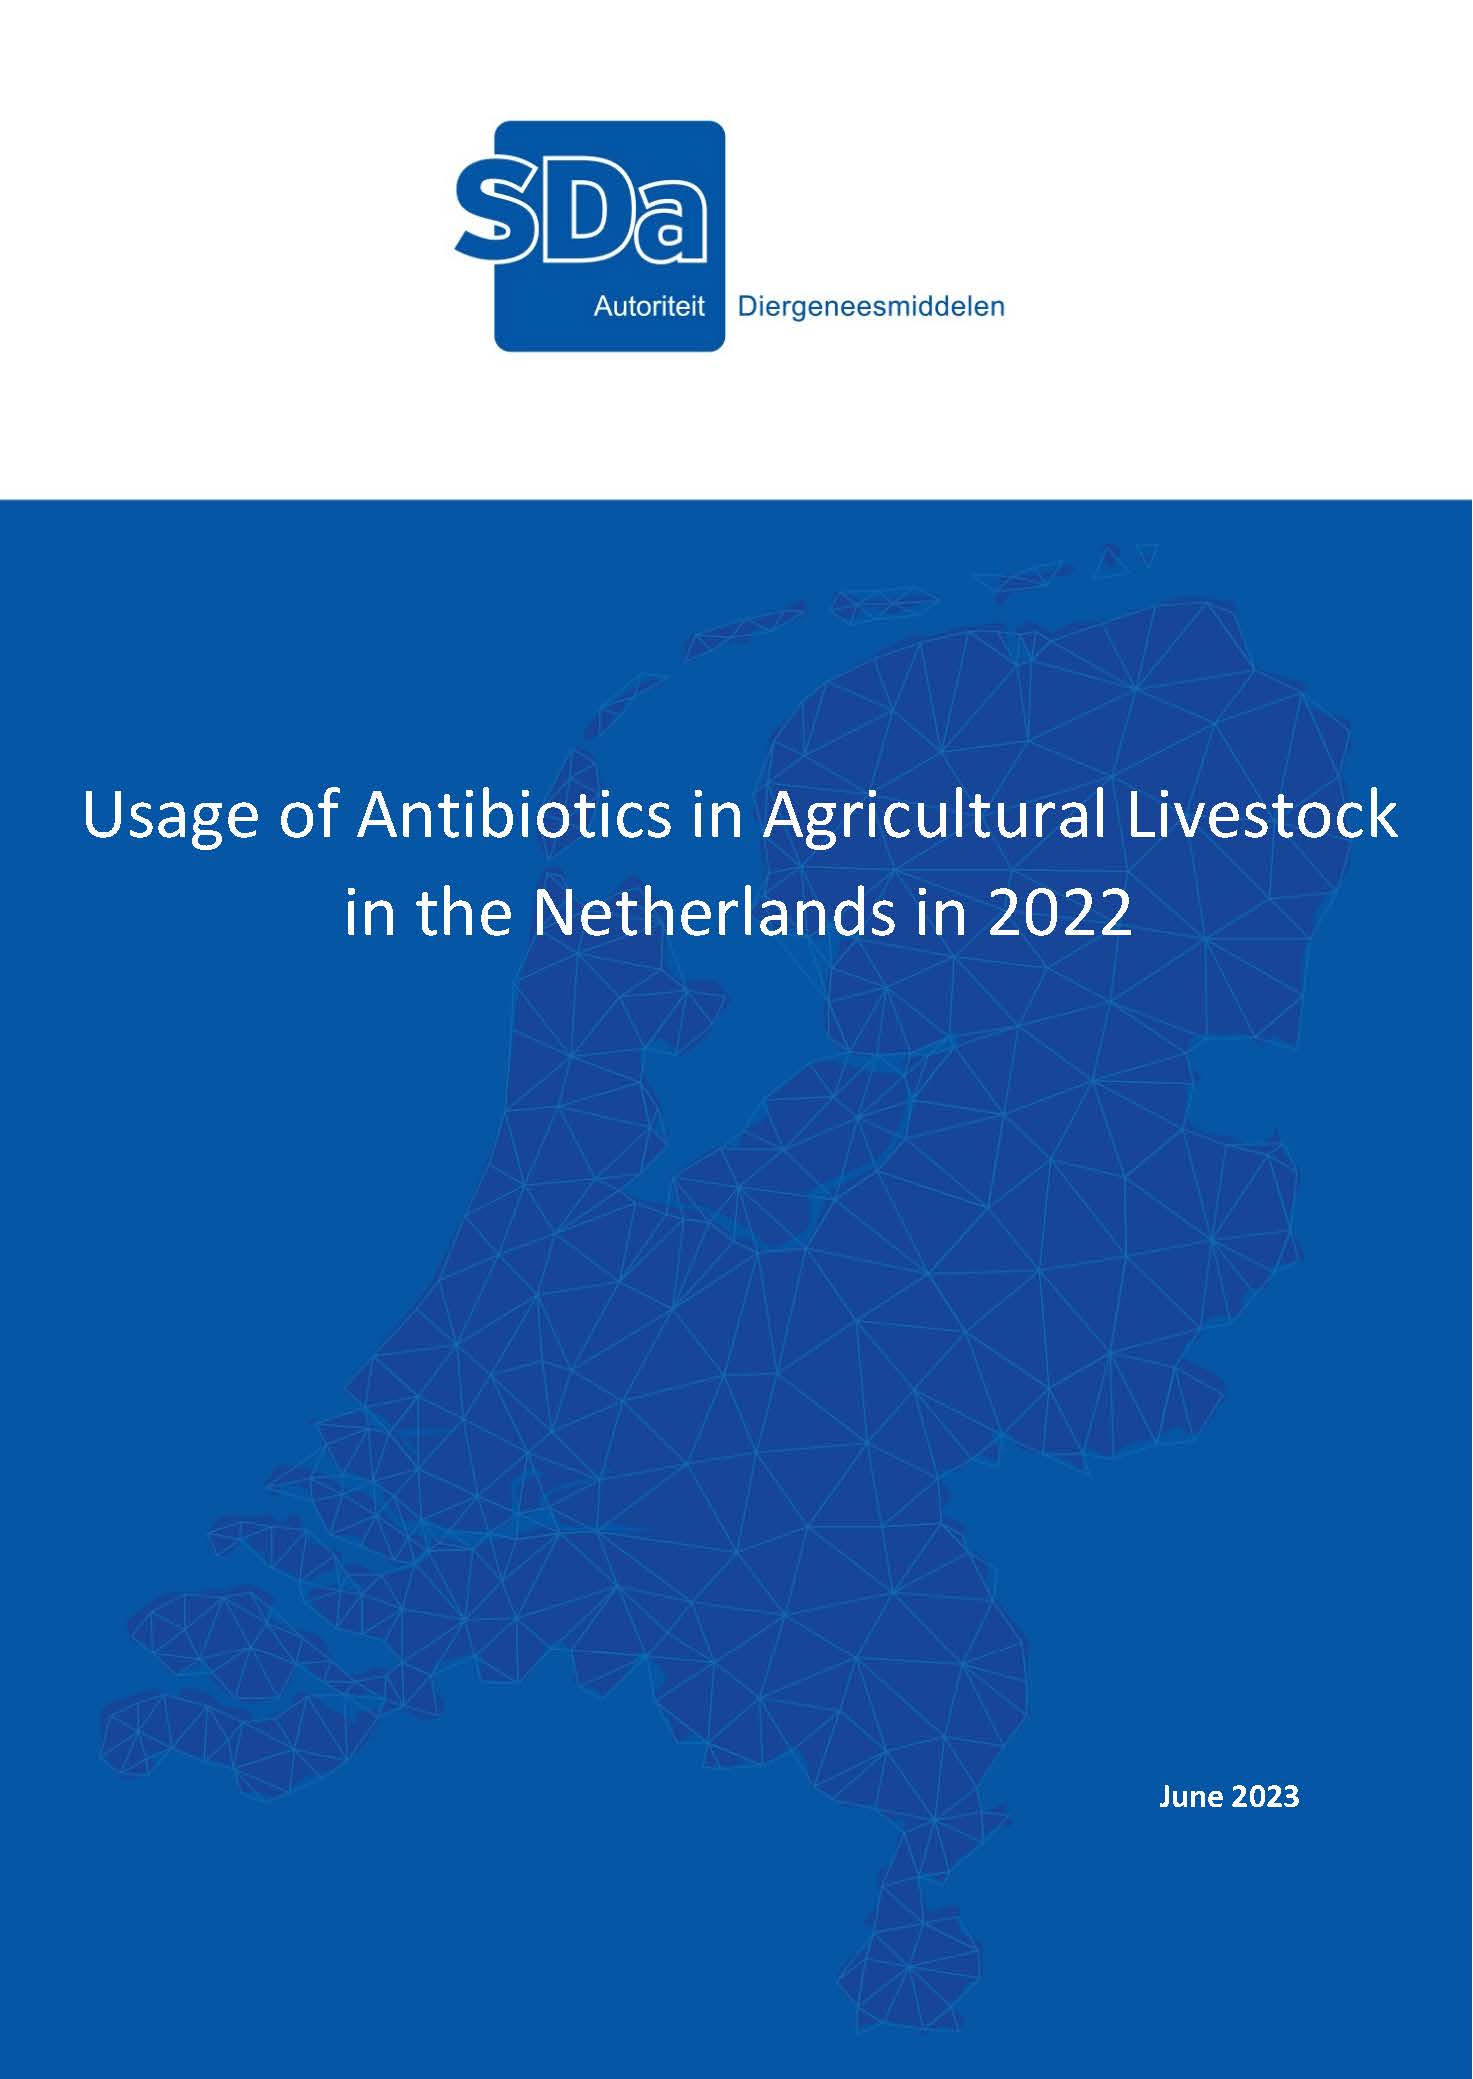 SDa-report 'Usage of antibiotics livestock in the Netherlands in 2022'
